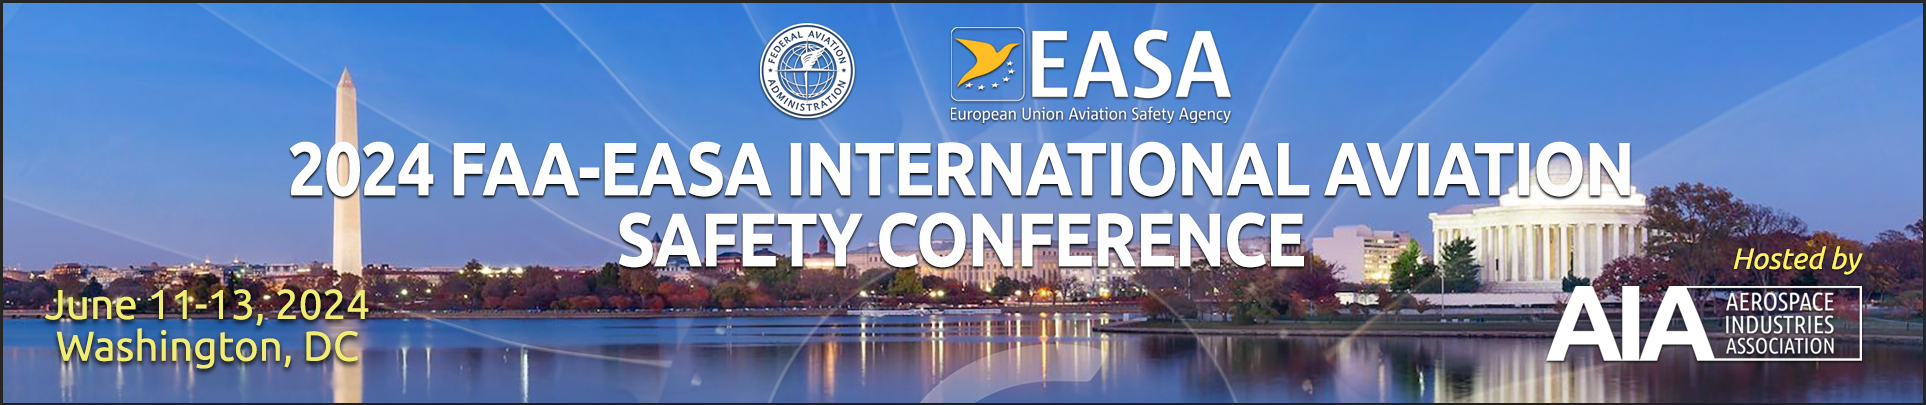 FAA-EASA 2024 Conference